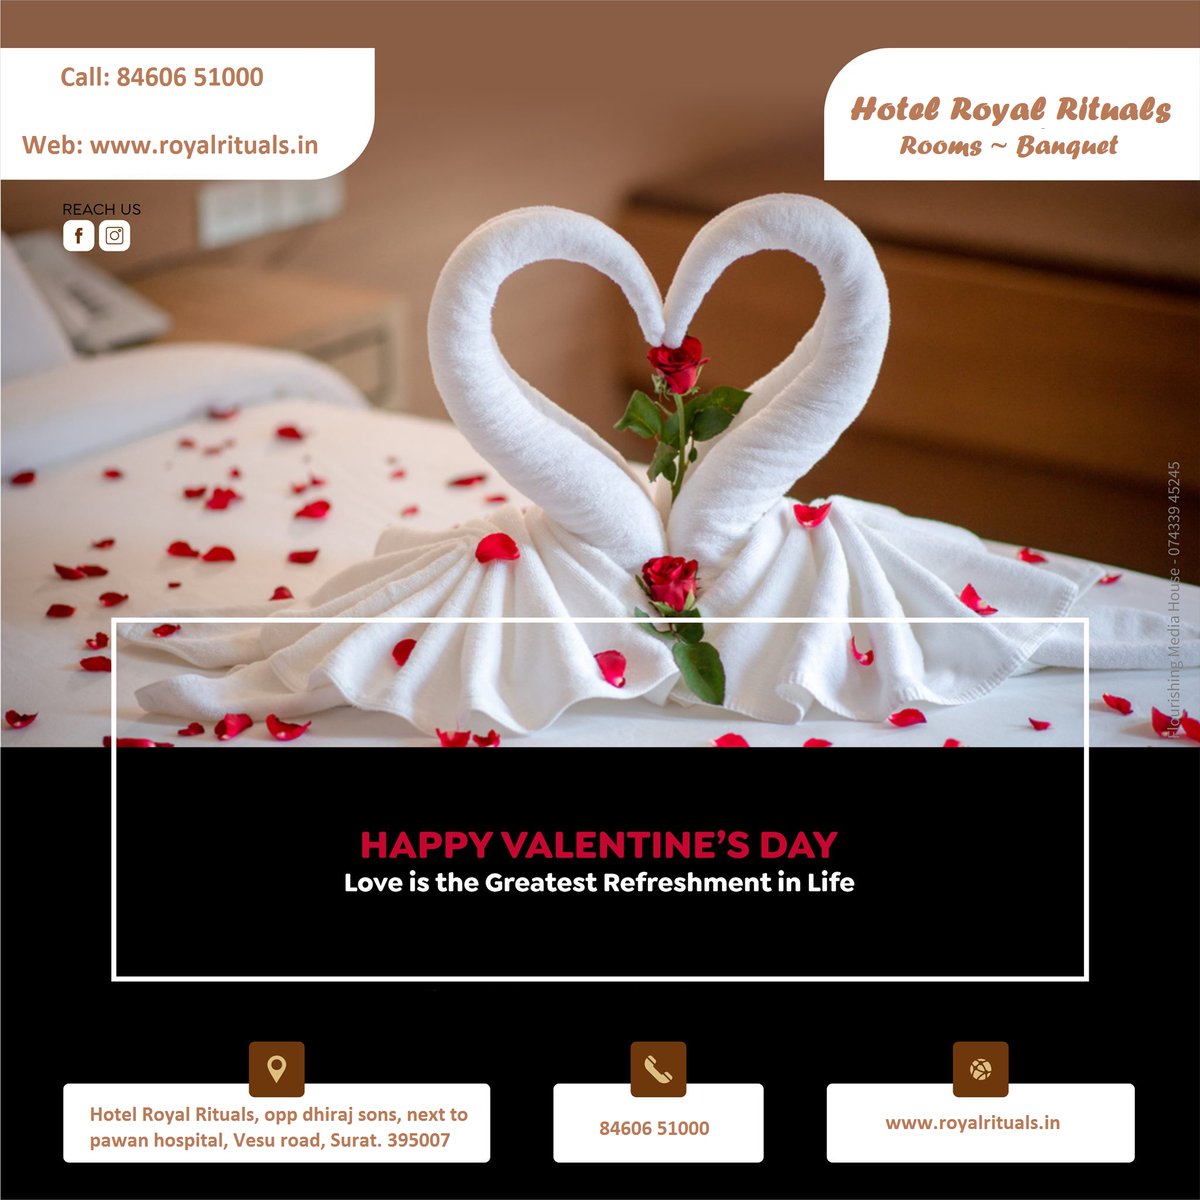 Happy Valentines Day.!
.
Book: royalrituals.in
Call: 8460651000
.
#hotelroyalrituals #vesuhotel #dumashotel #airporthotel #ghoddodroadhotel #athwahotel #viproadhotel #diamondboursehotel #hotelnearme #suratweddinghotel #suratfamilyhotel #surat #smartcitysurat #suratblog